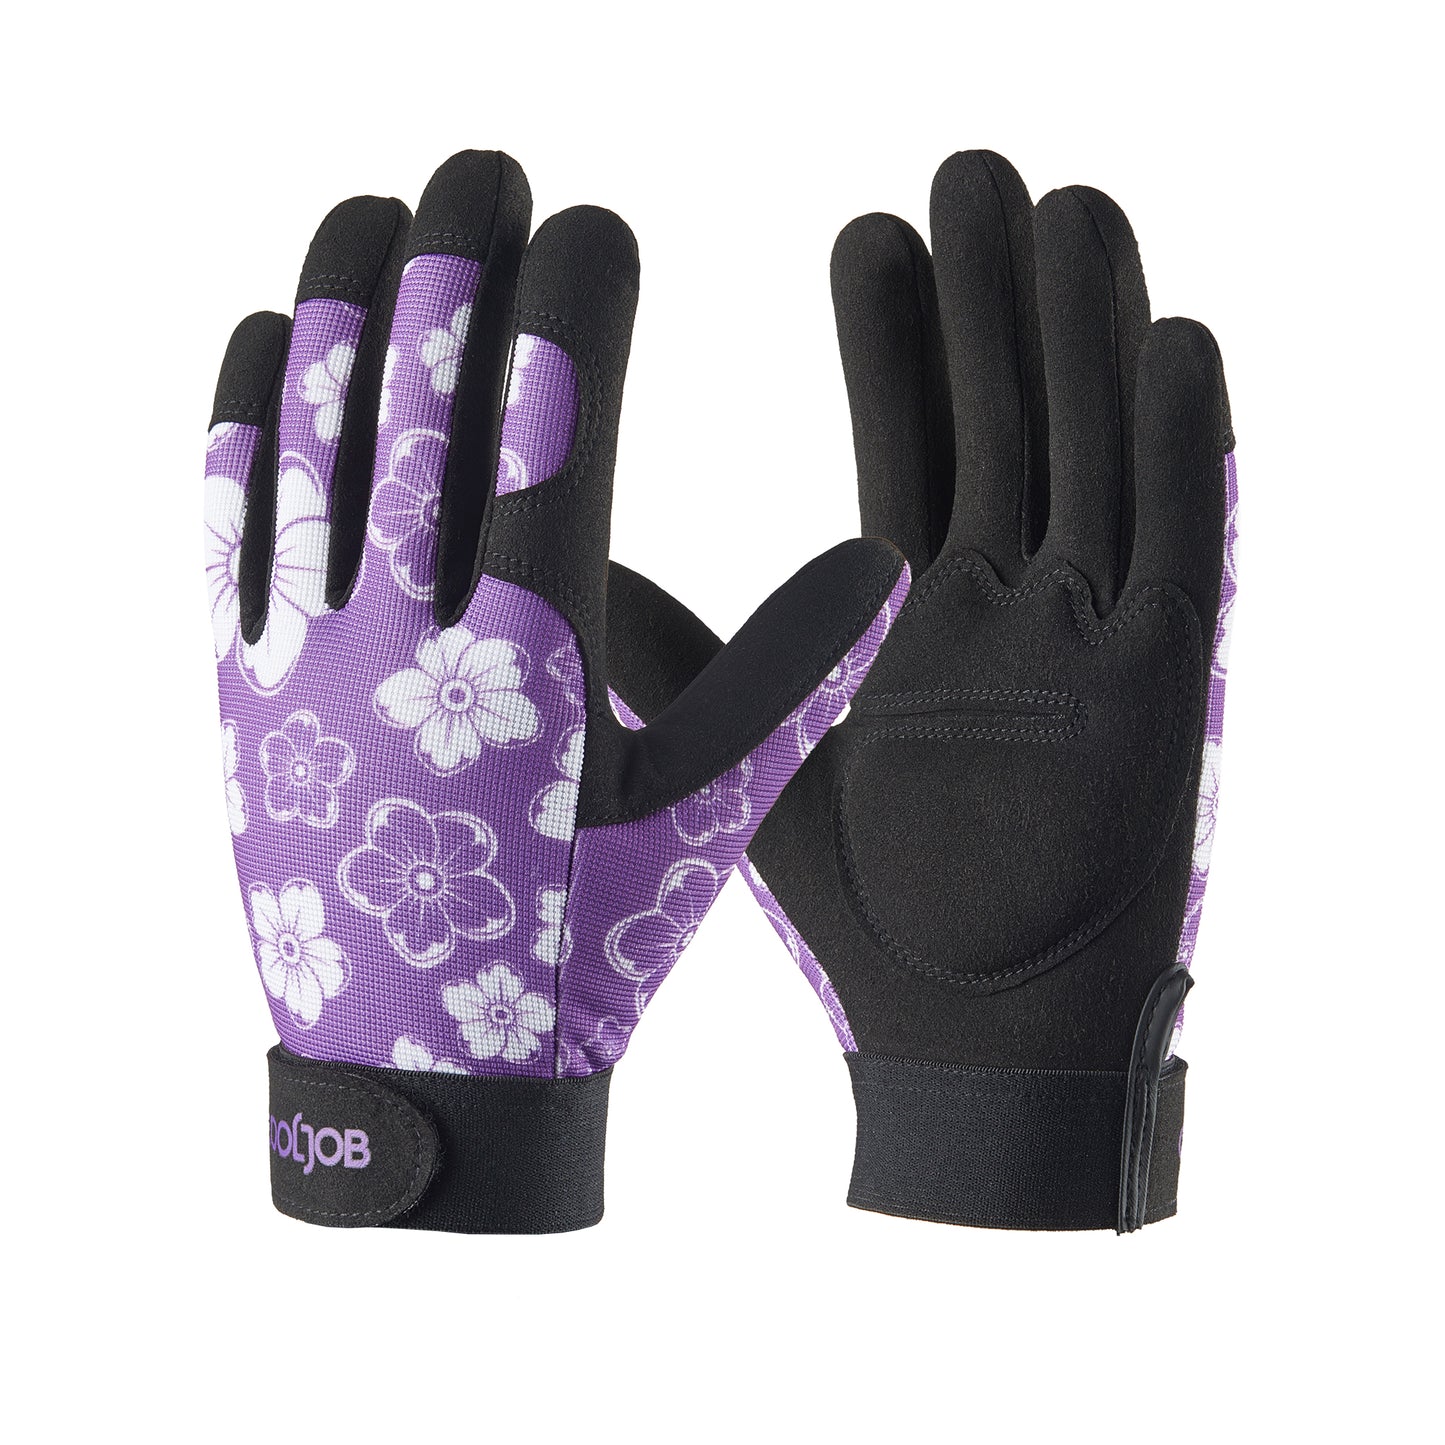 Thorn Proof Gardening Work Gloves for Women